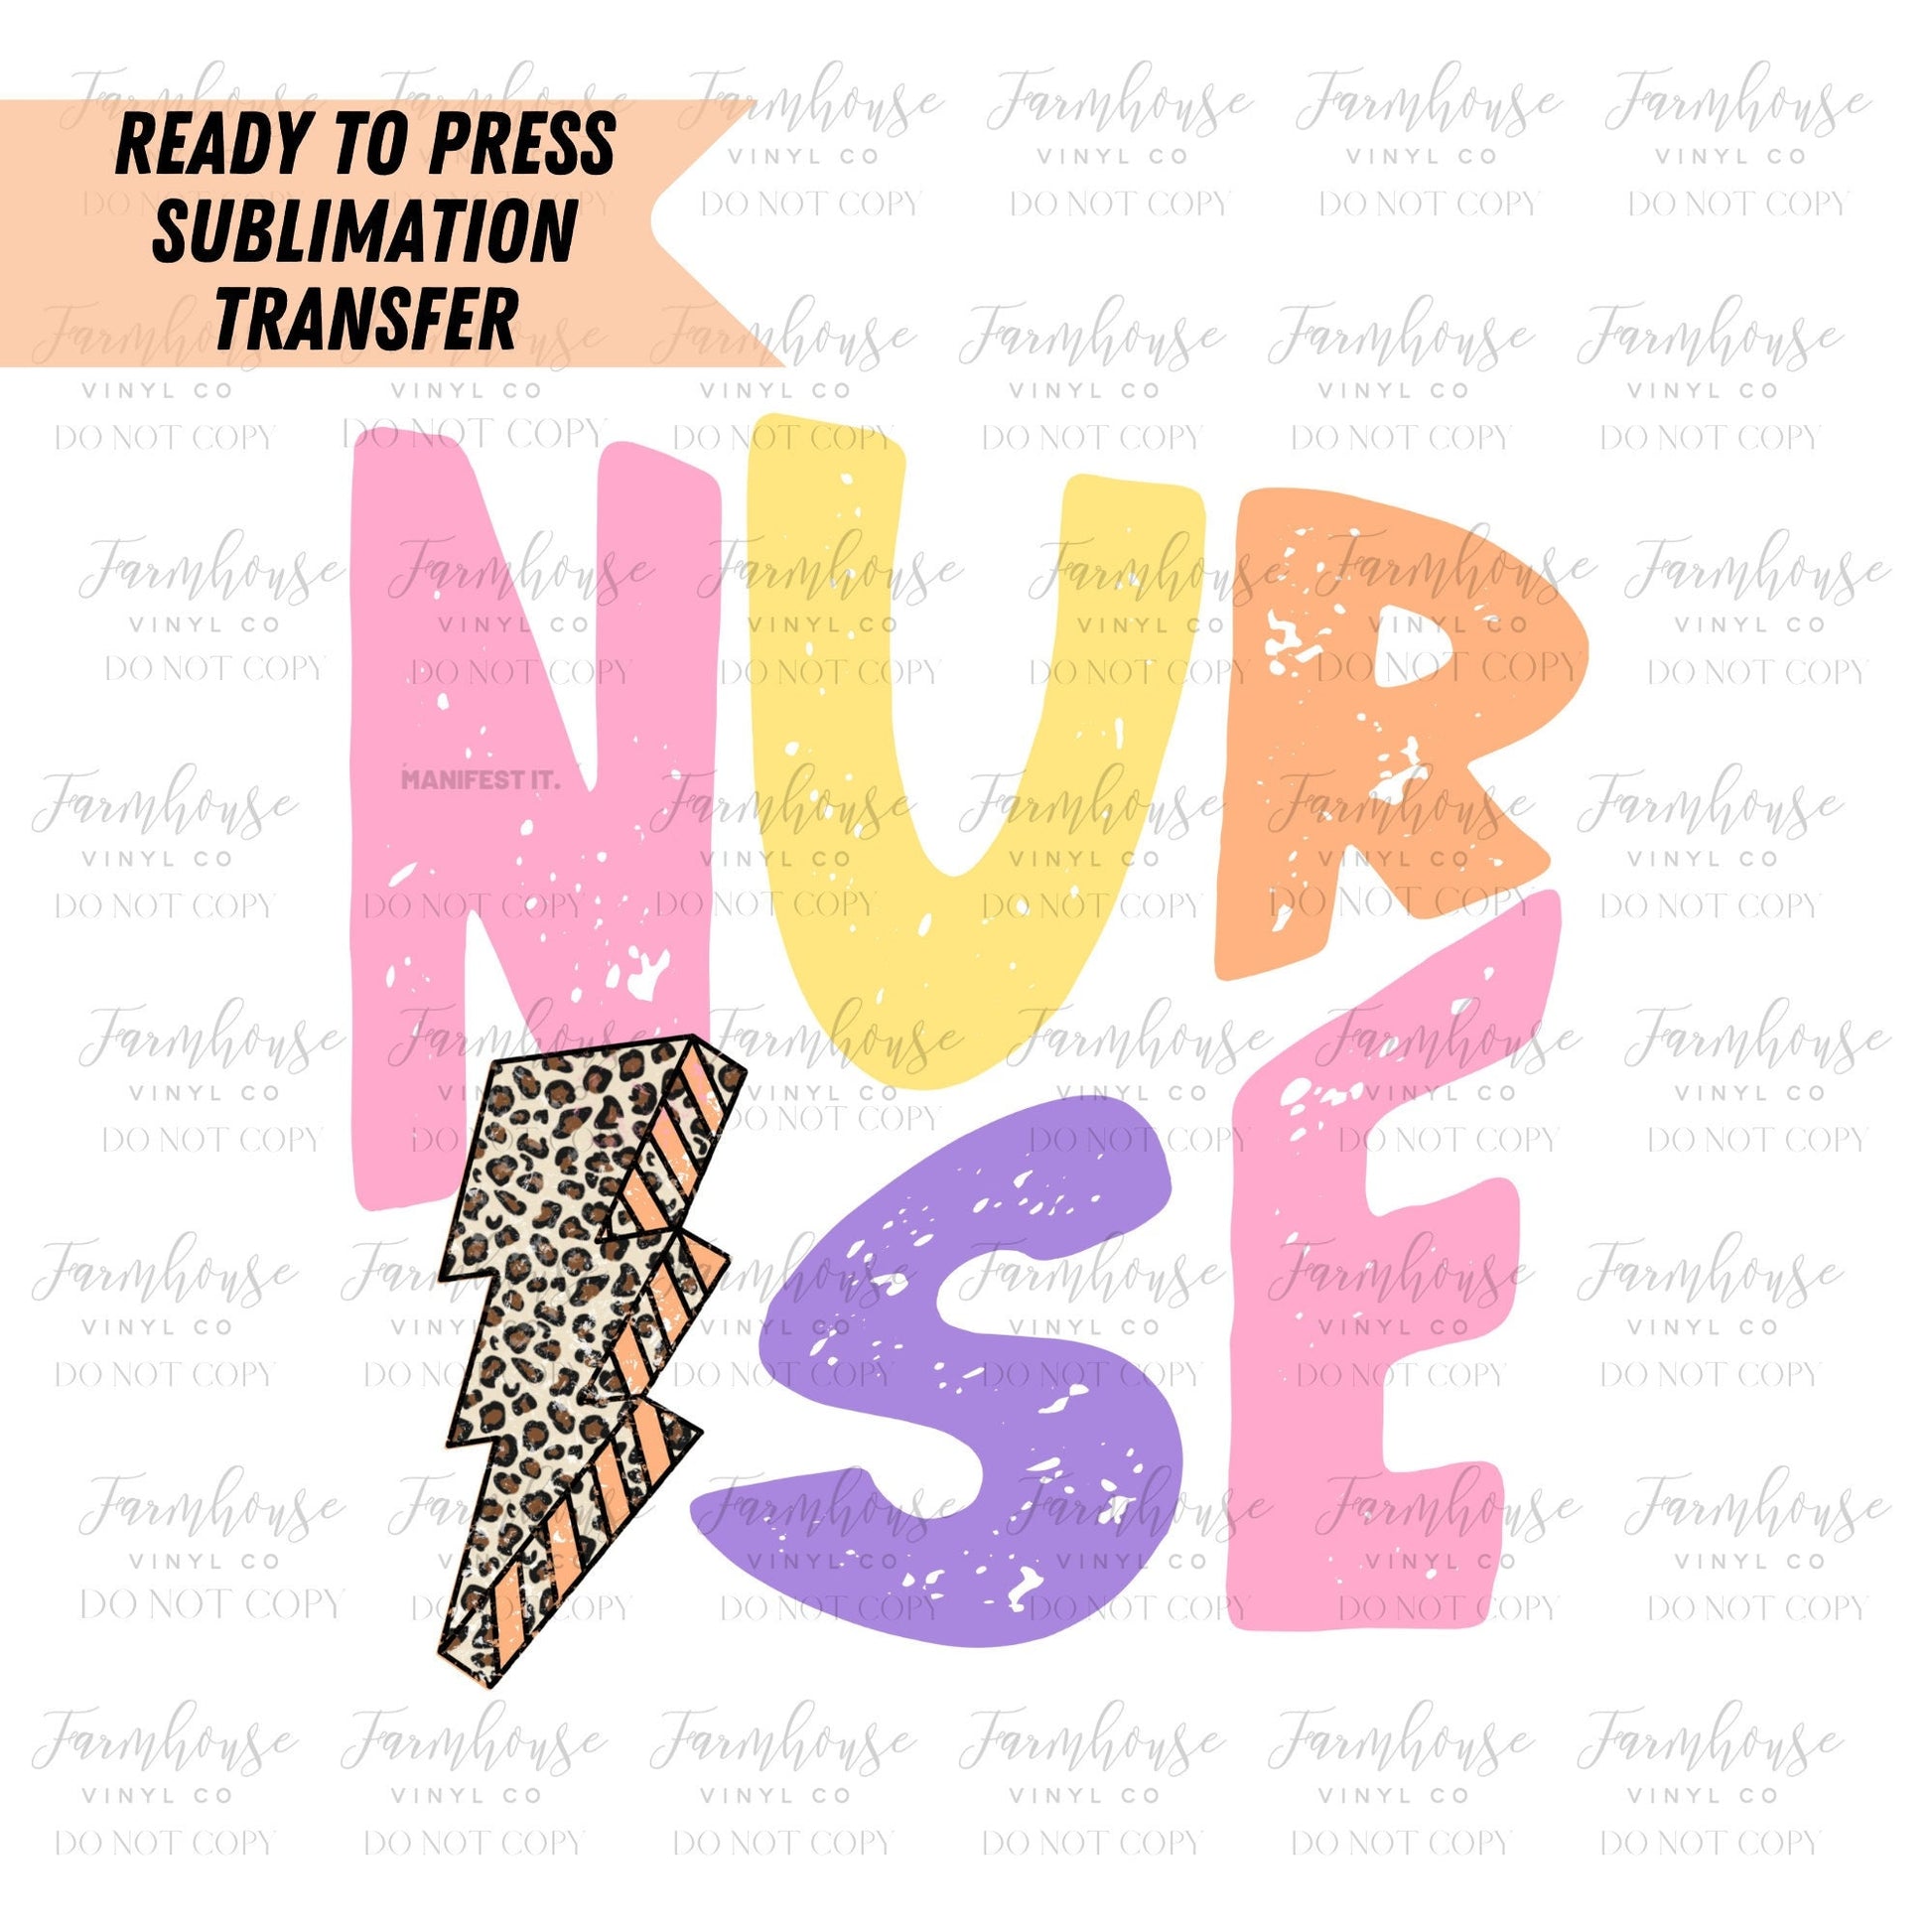 Nurse Distressed Leopard Ready To Press Sublimation Transfer - Farmhouse Vinyl Co